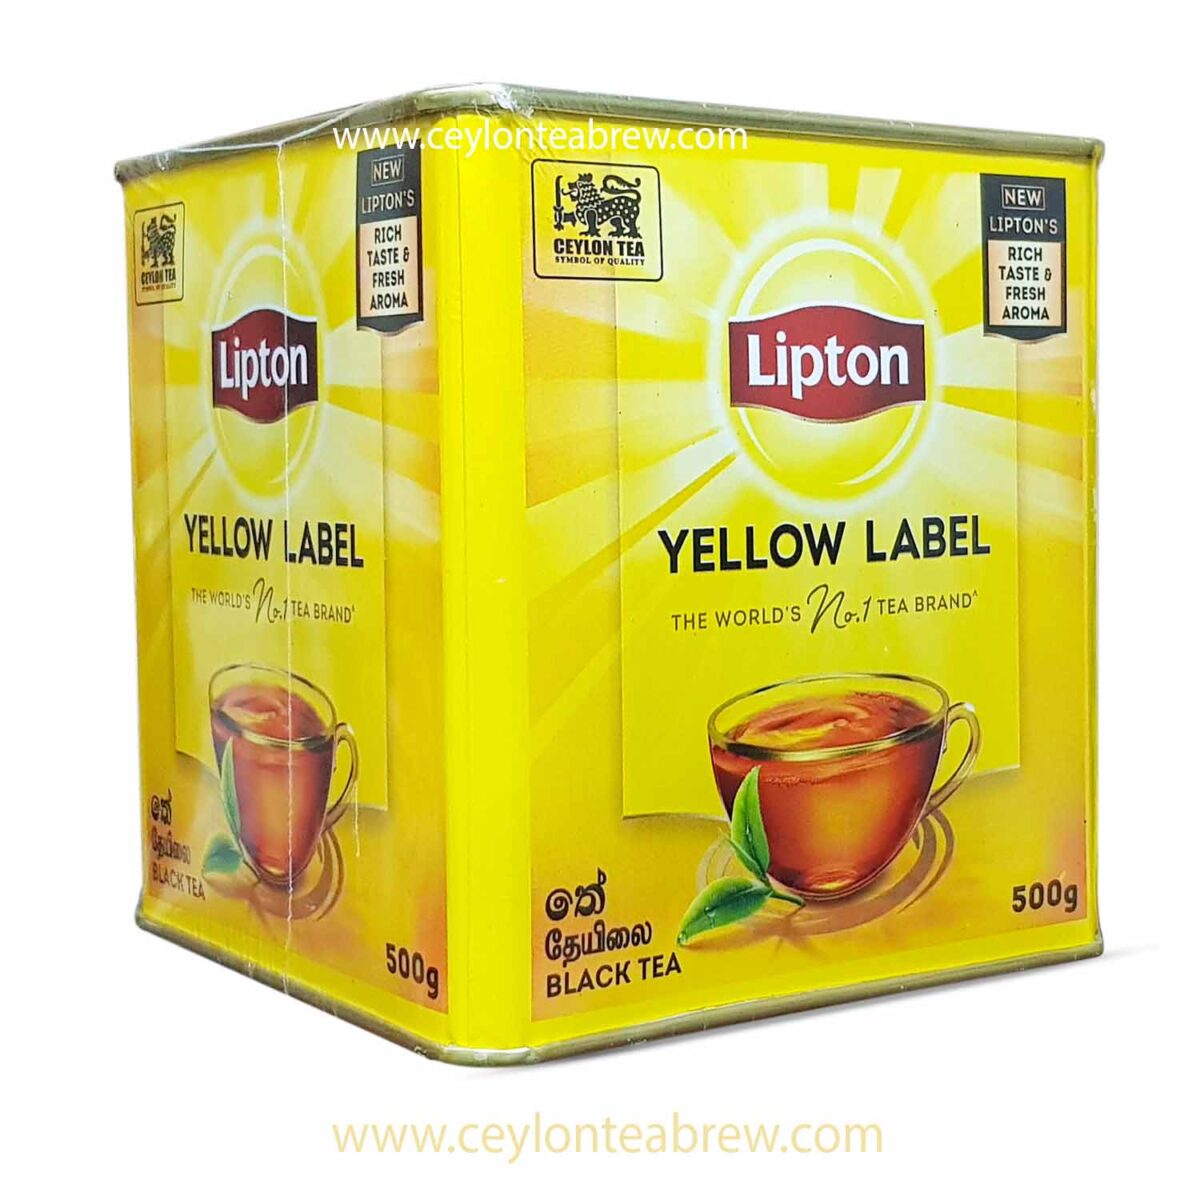 Ceylon Lipton yellow label black tea in caddy 500g